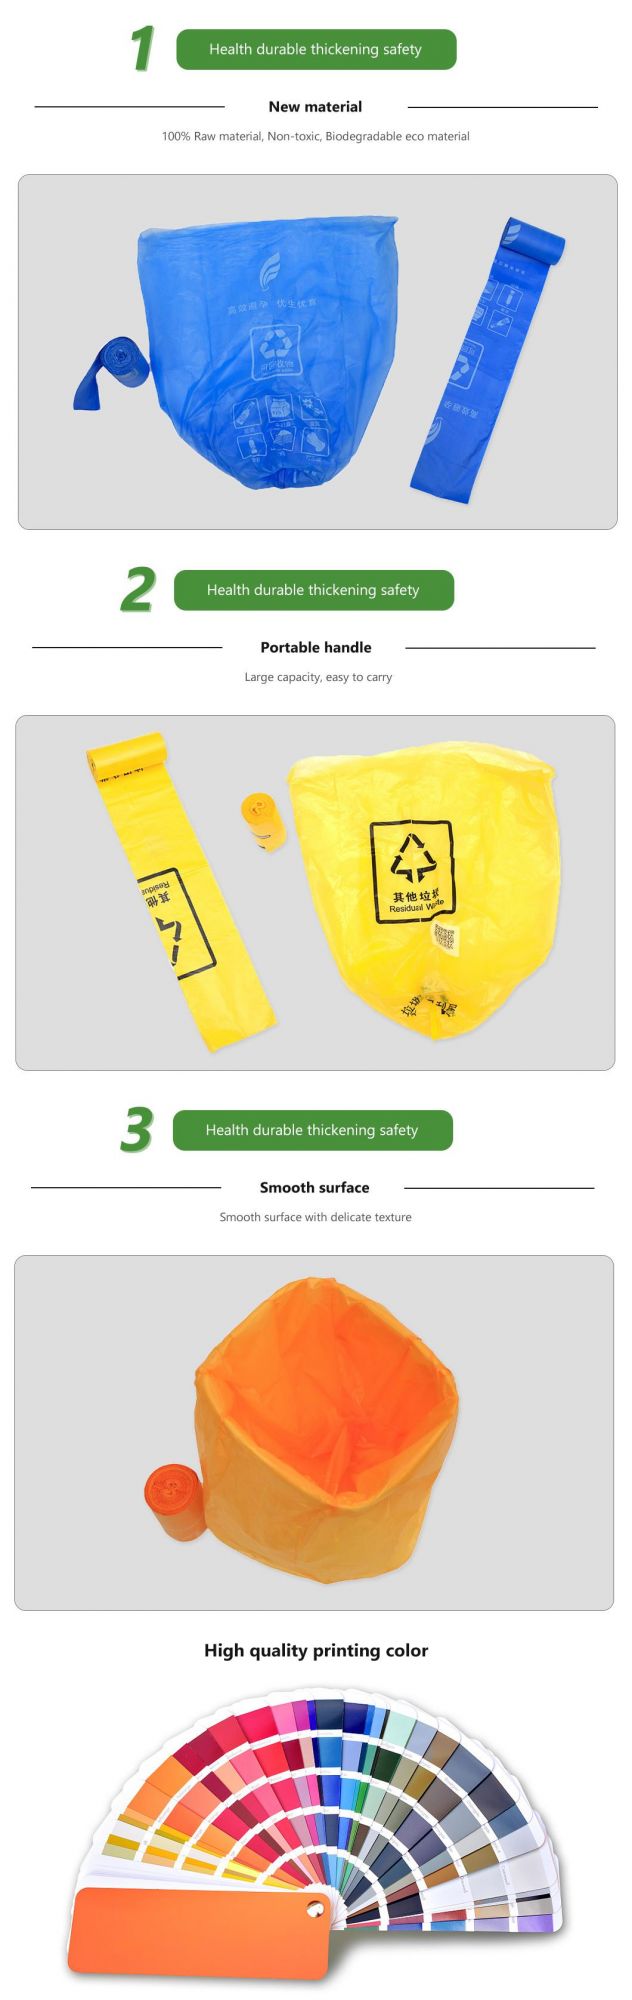 PLA+Pbat/Pbat+Corn Starch Biodegradable Bags, Compostable Bags, Rubbish Bags for Hospital